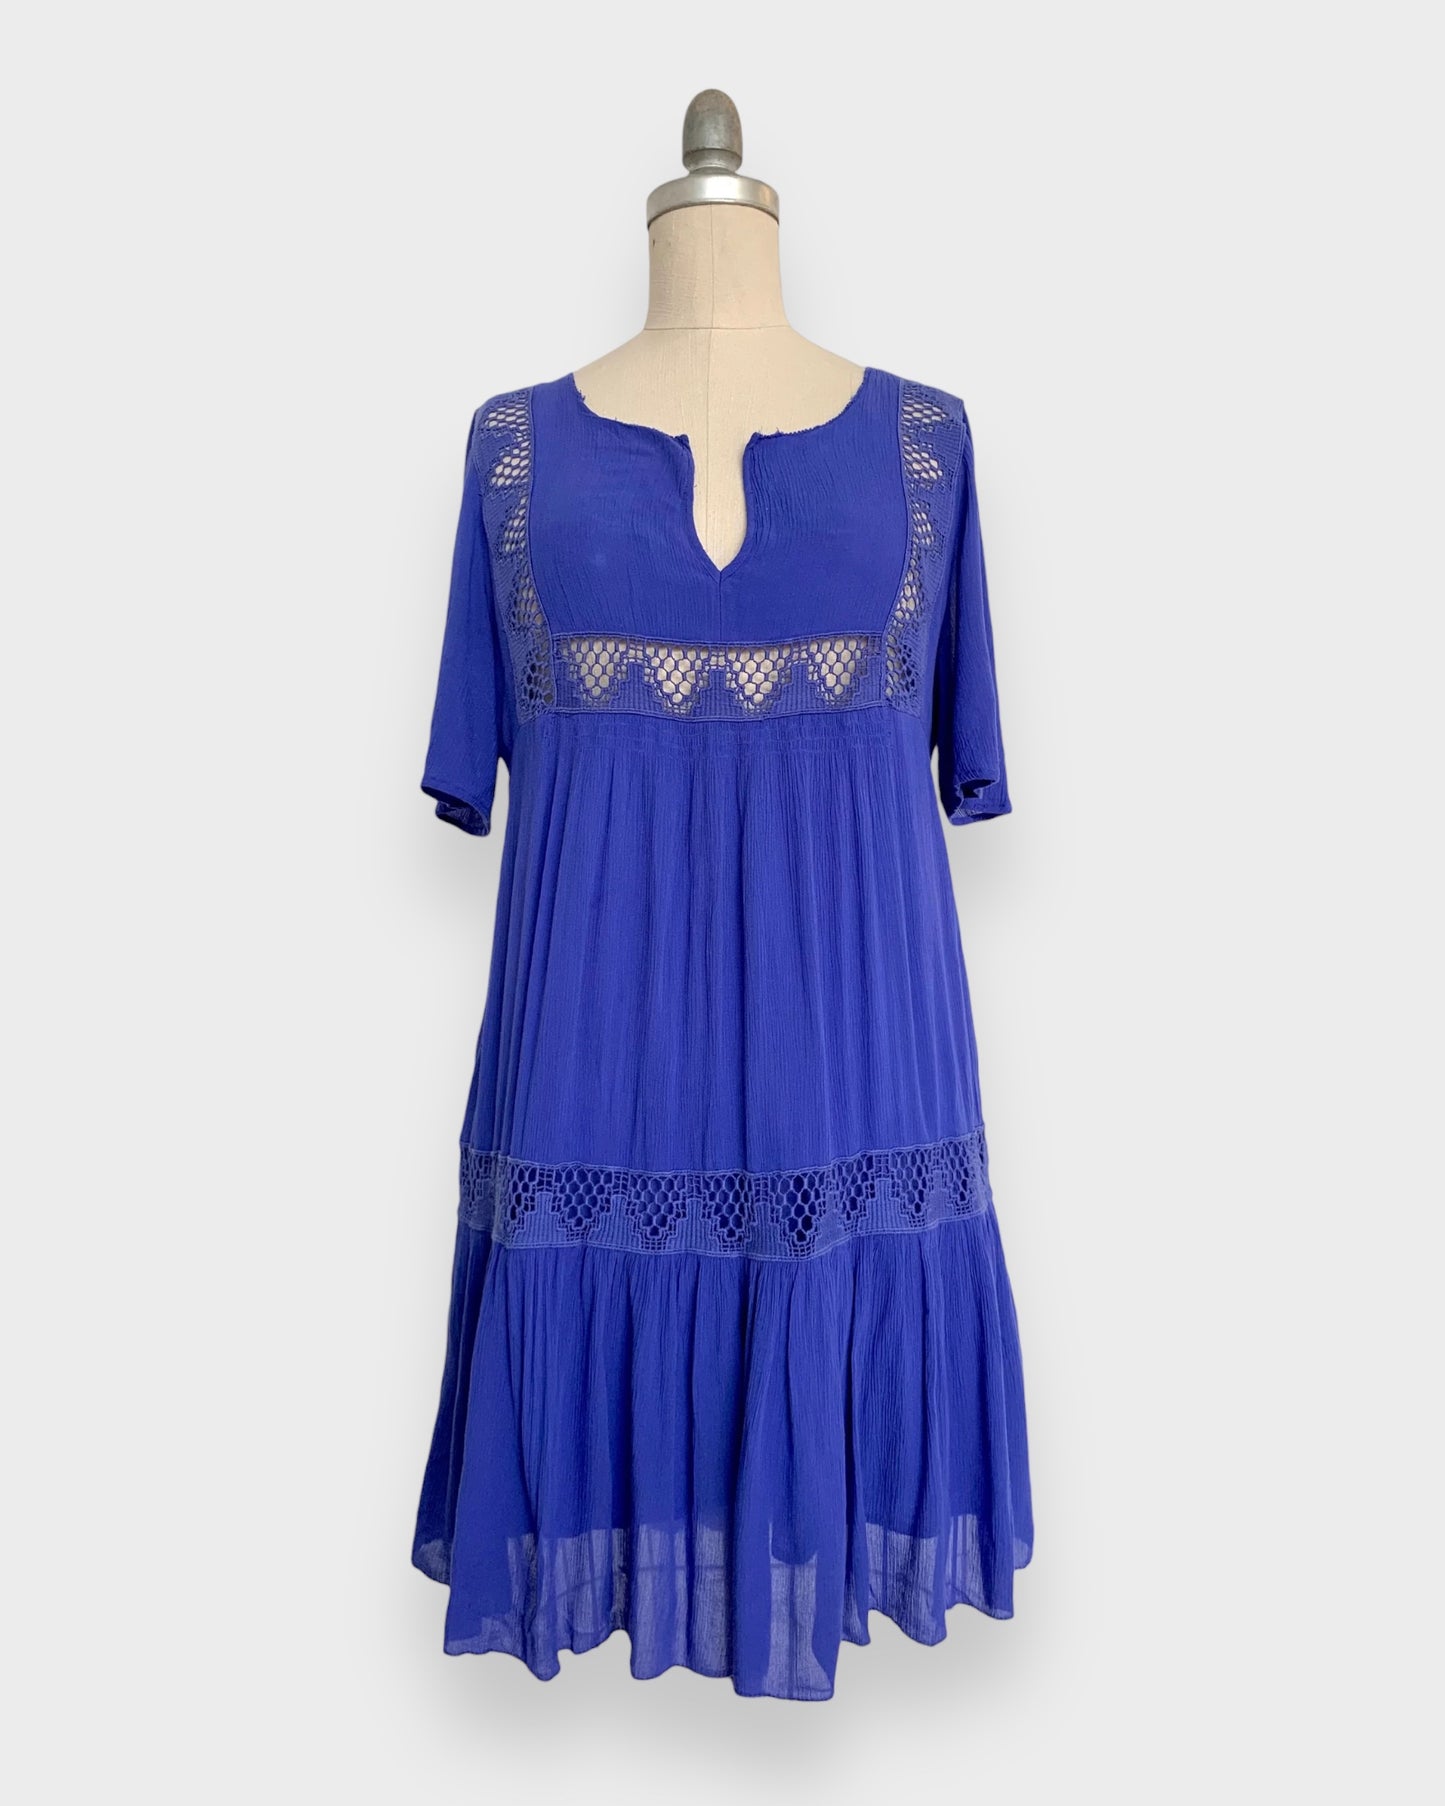 Blue bash dress